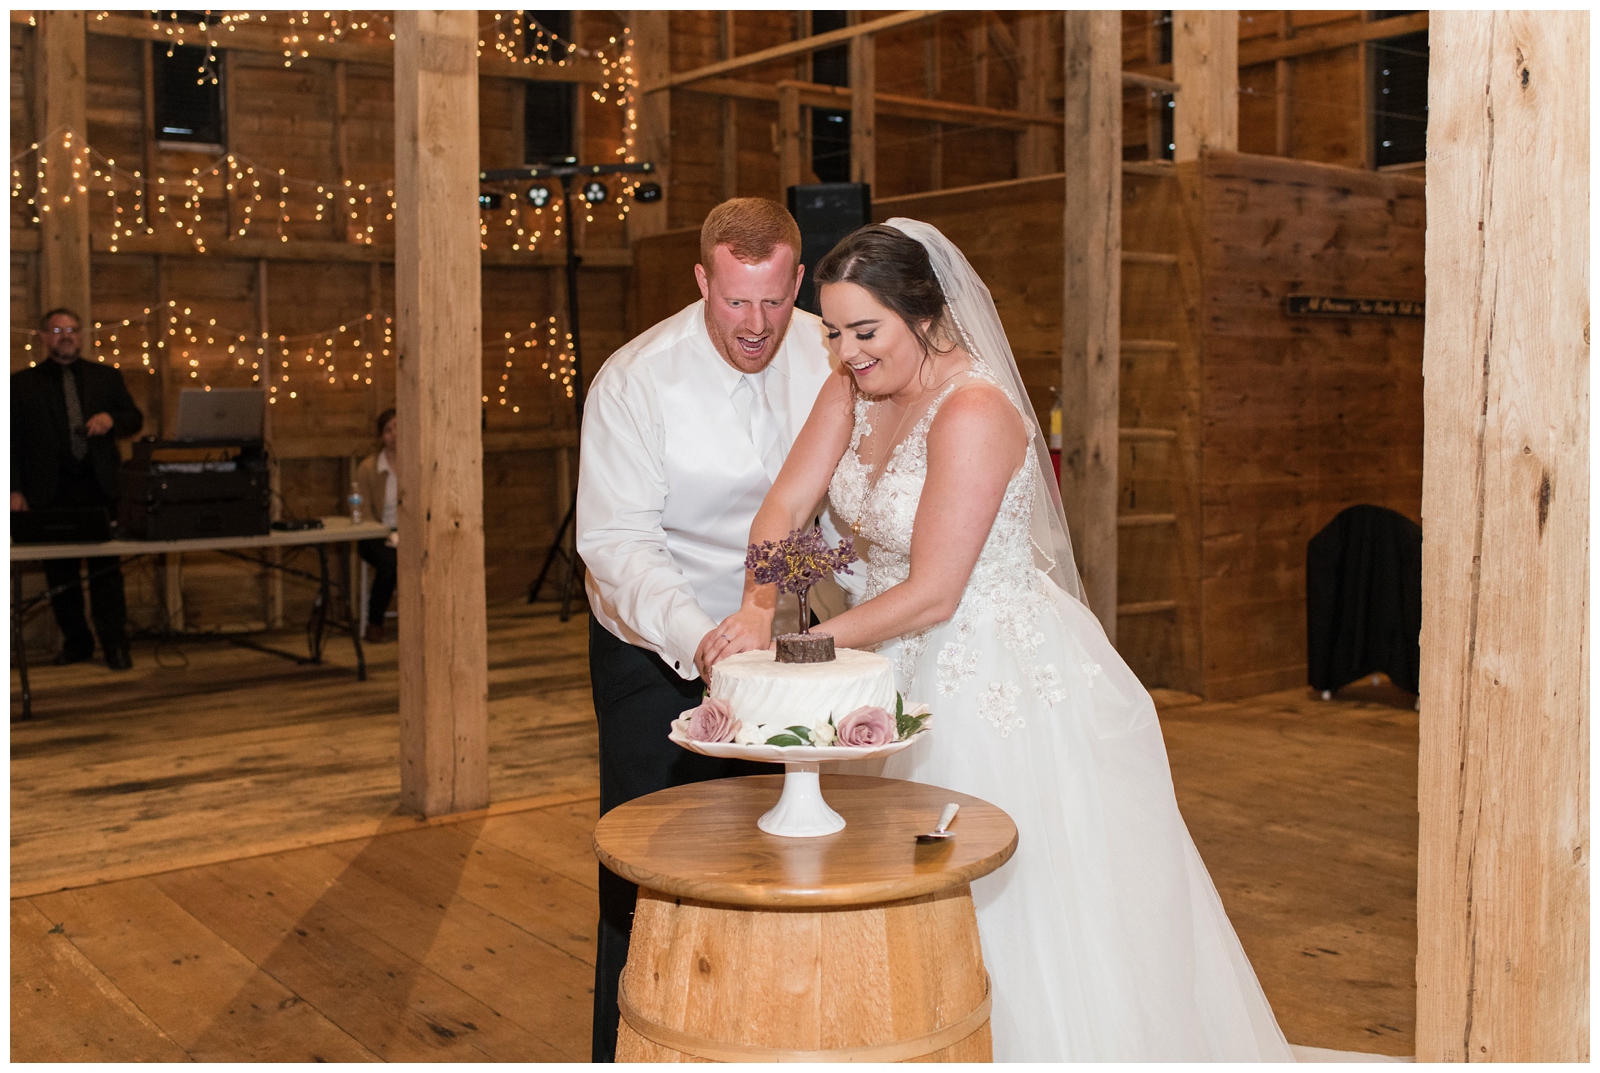 Bride and groom cut single layer wedding cake on barrel during barn reception at Pretty Prairie Farms